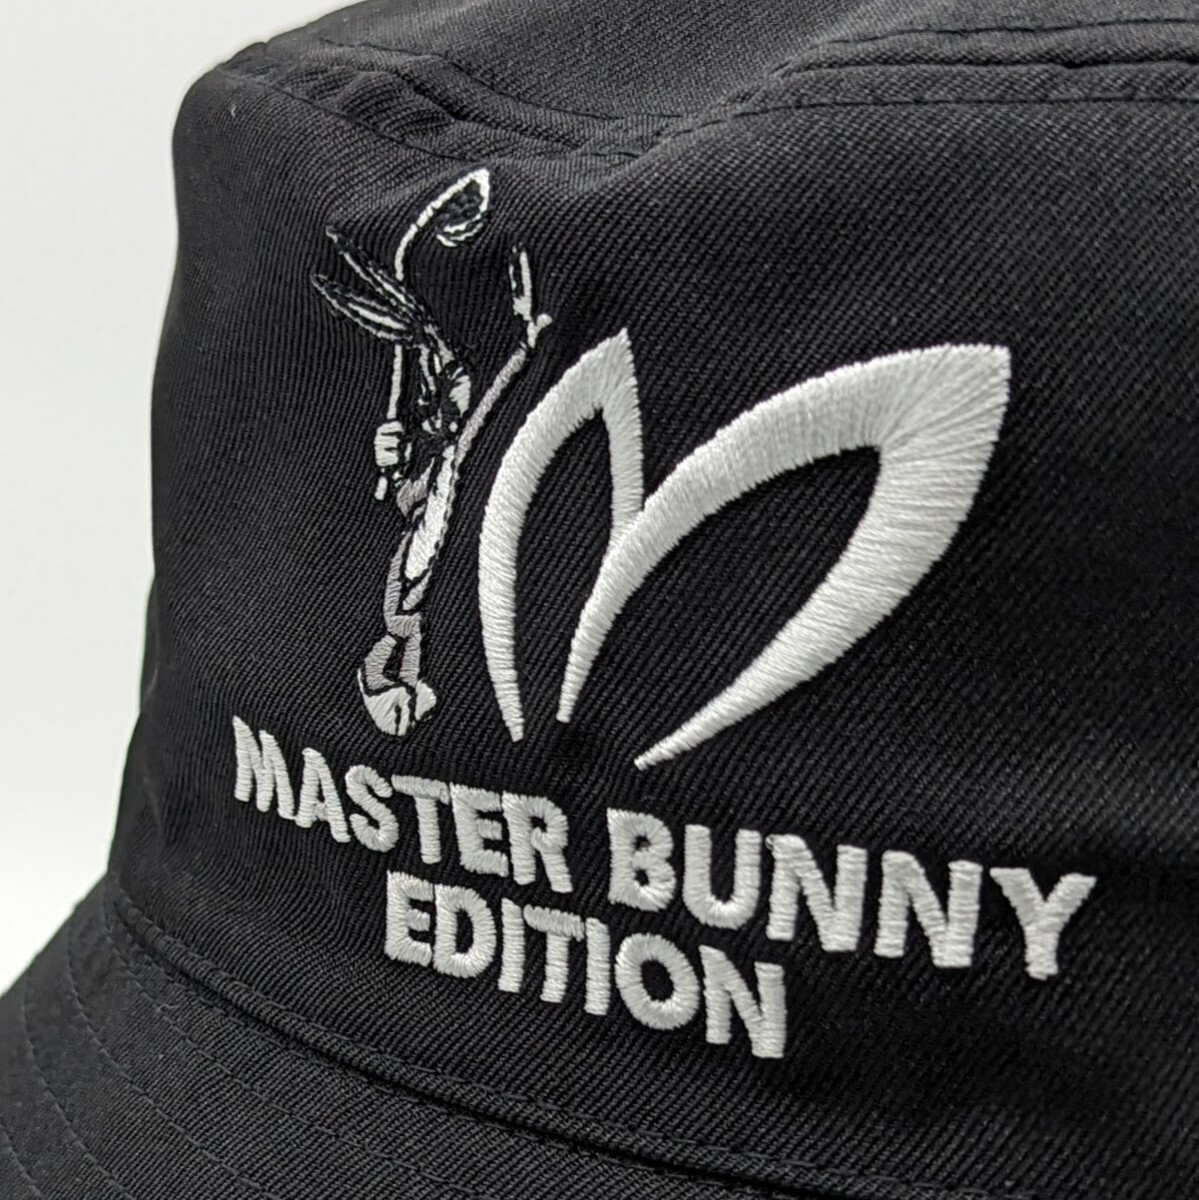 * new goods regular goods PEARLYGATES/ master ba knee [Bugs Bunny×MASTER BUNNY EDITION] reversible hat (UNISEX)